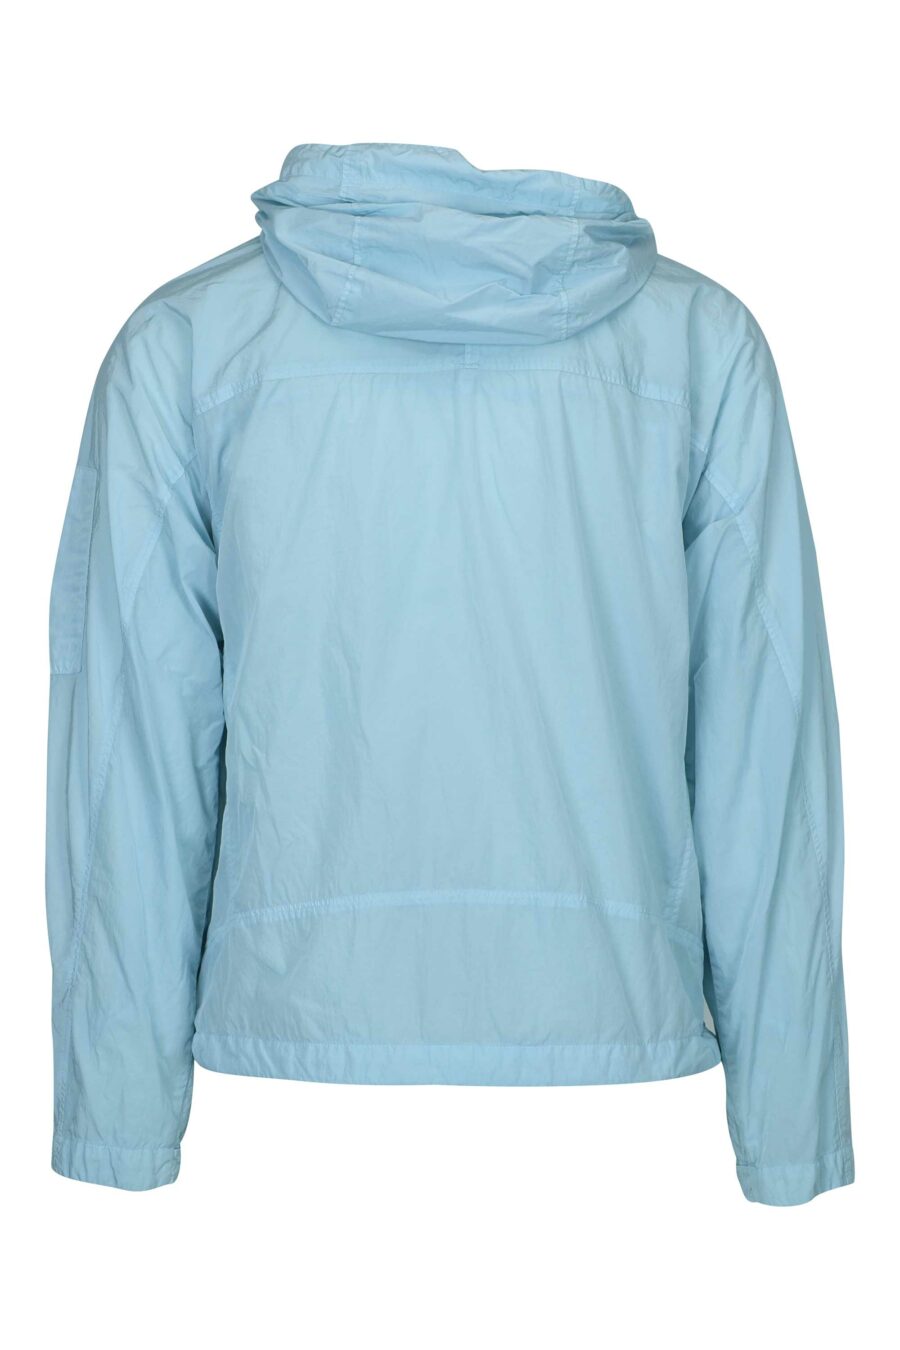 Light blue jacket with hood and logo - 7620943684452 1